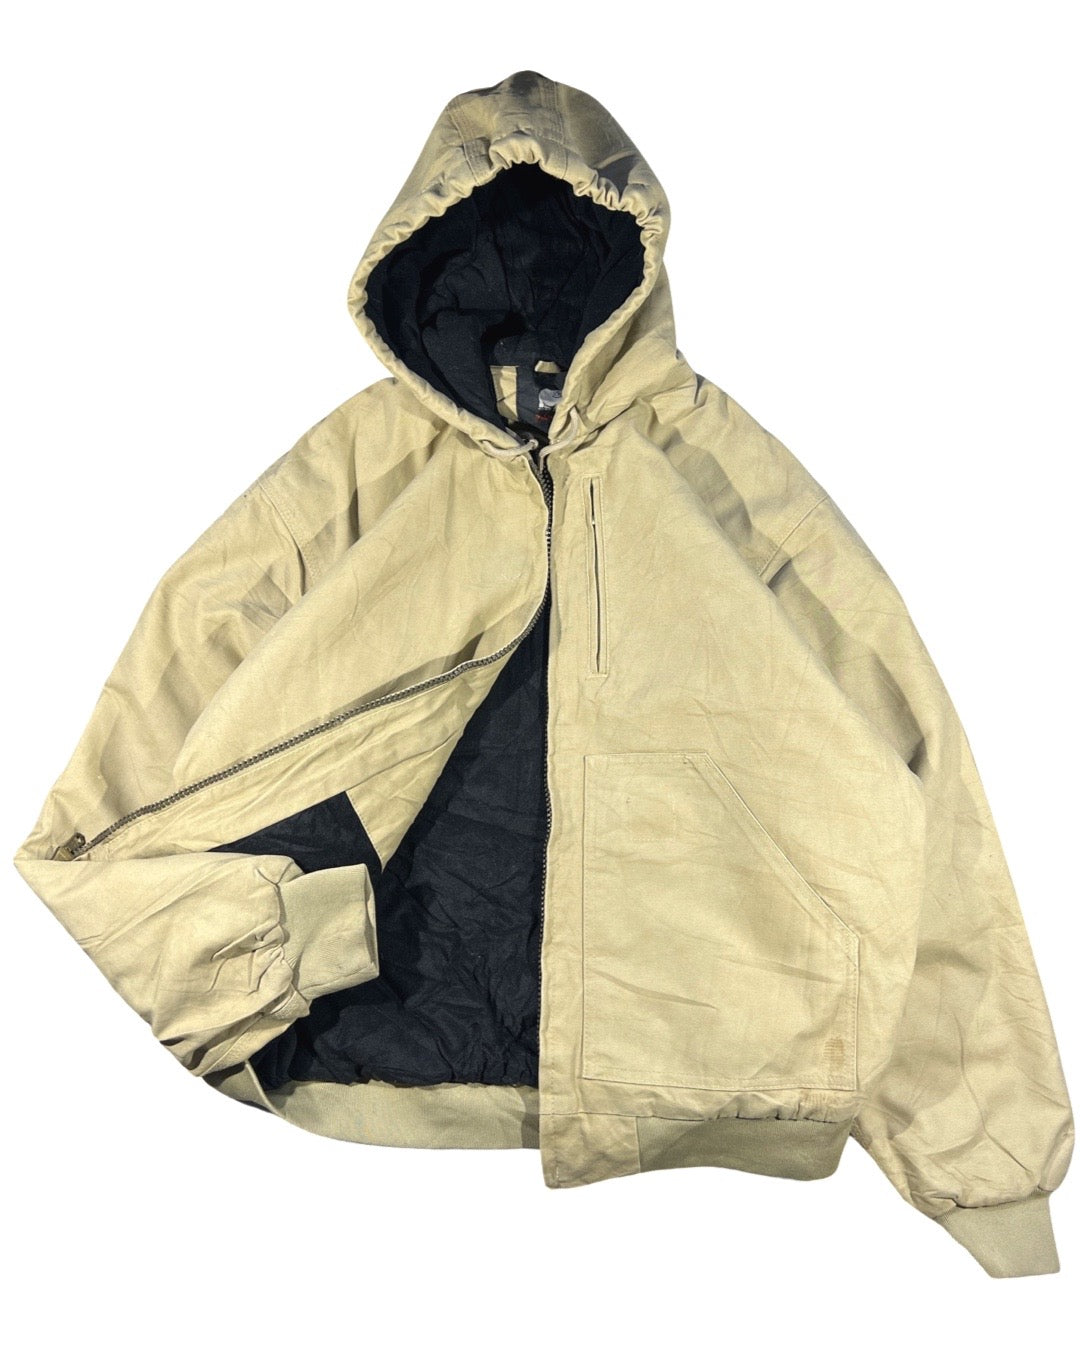 Vintage Hooded Work Jacket - L